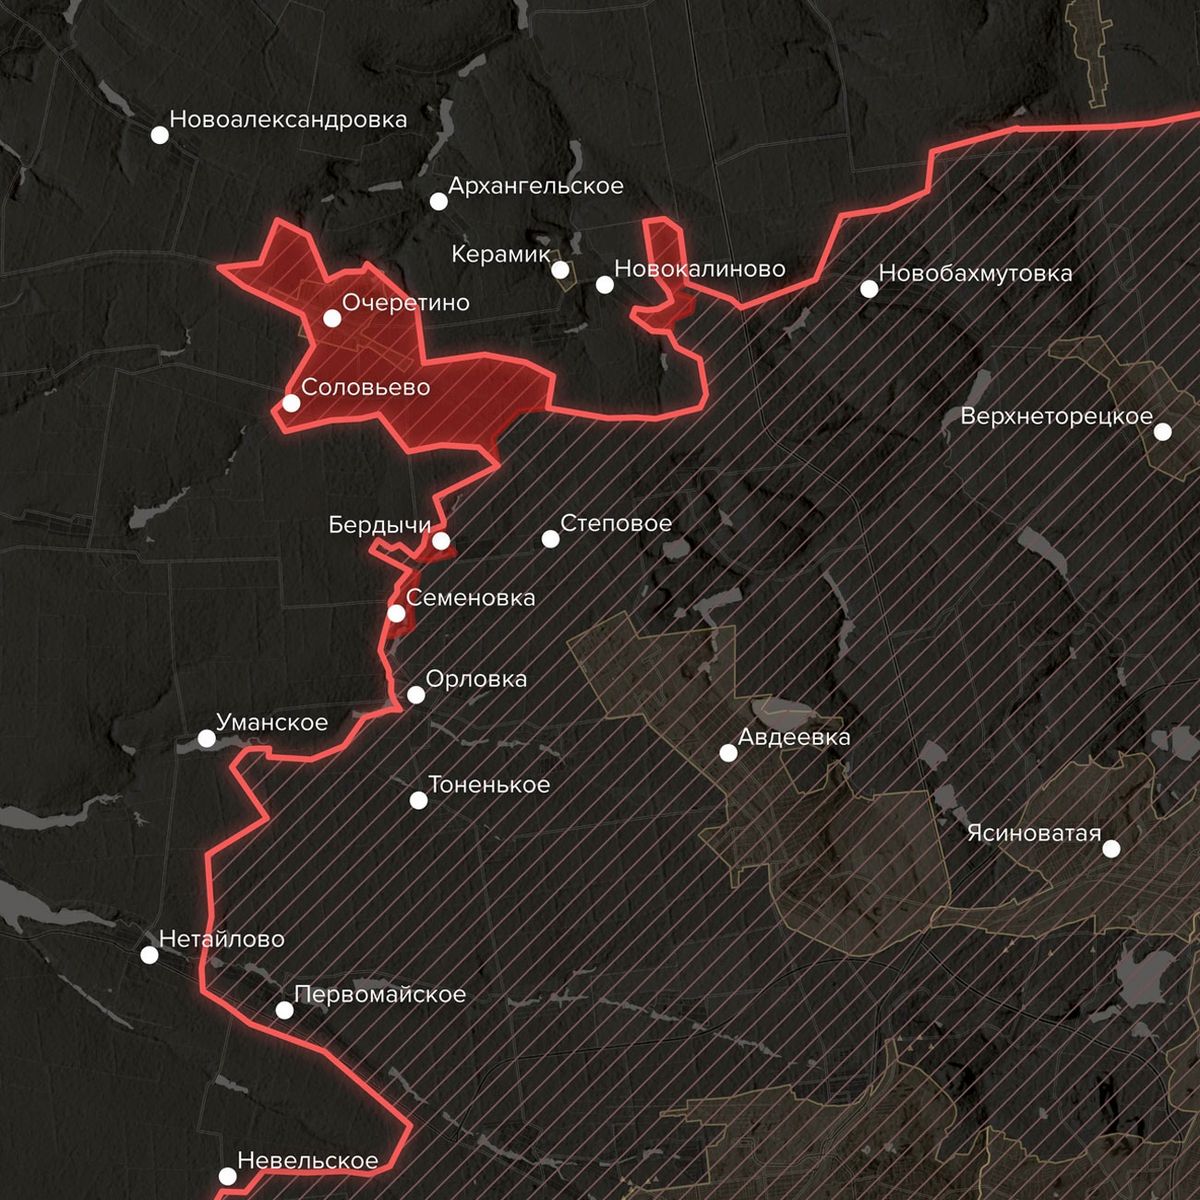 Colapsa la defensa de Ucrania en Donetsk.